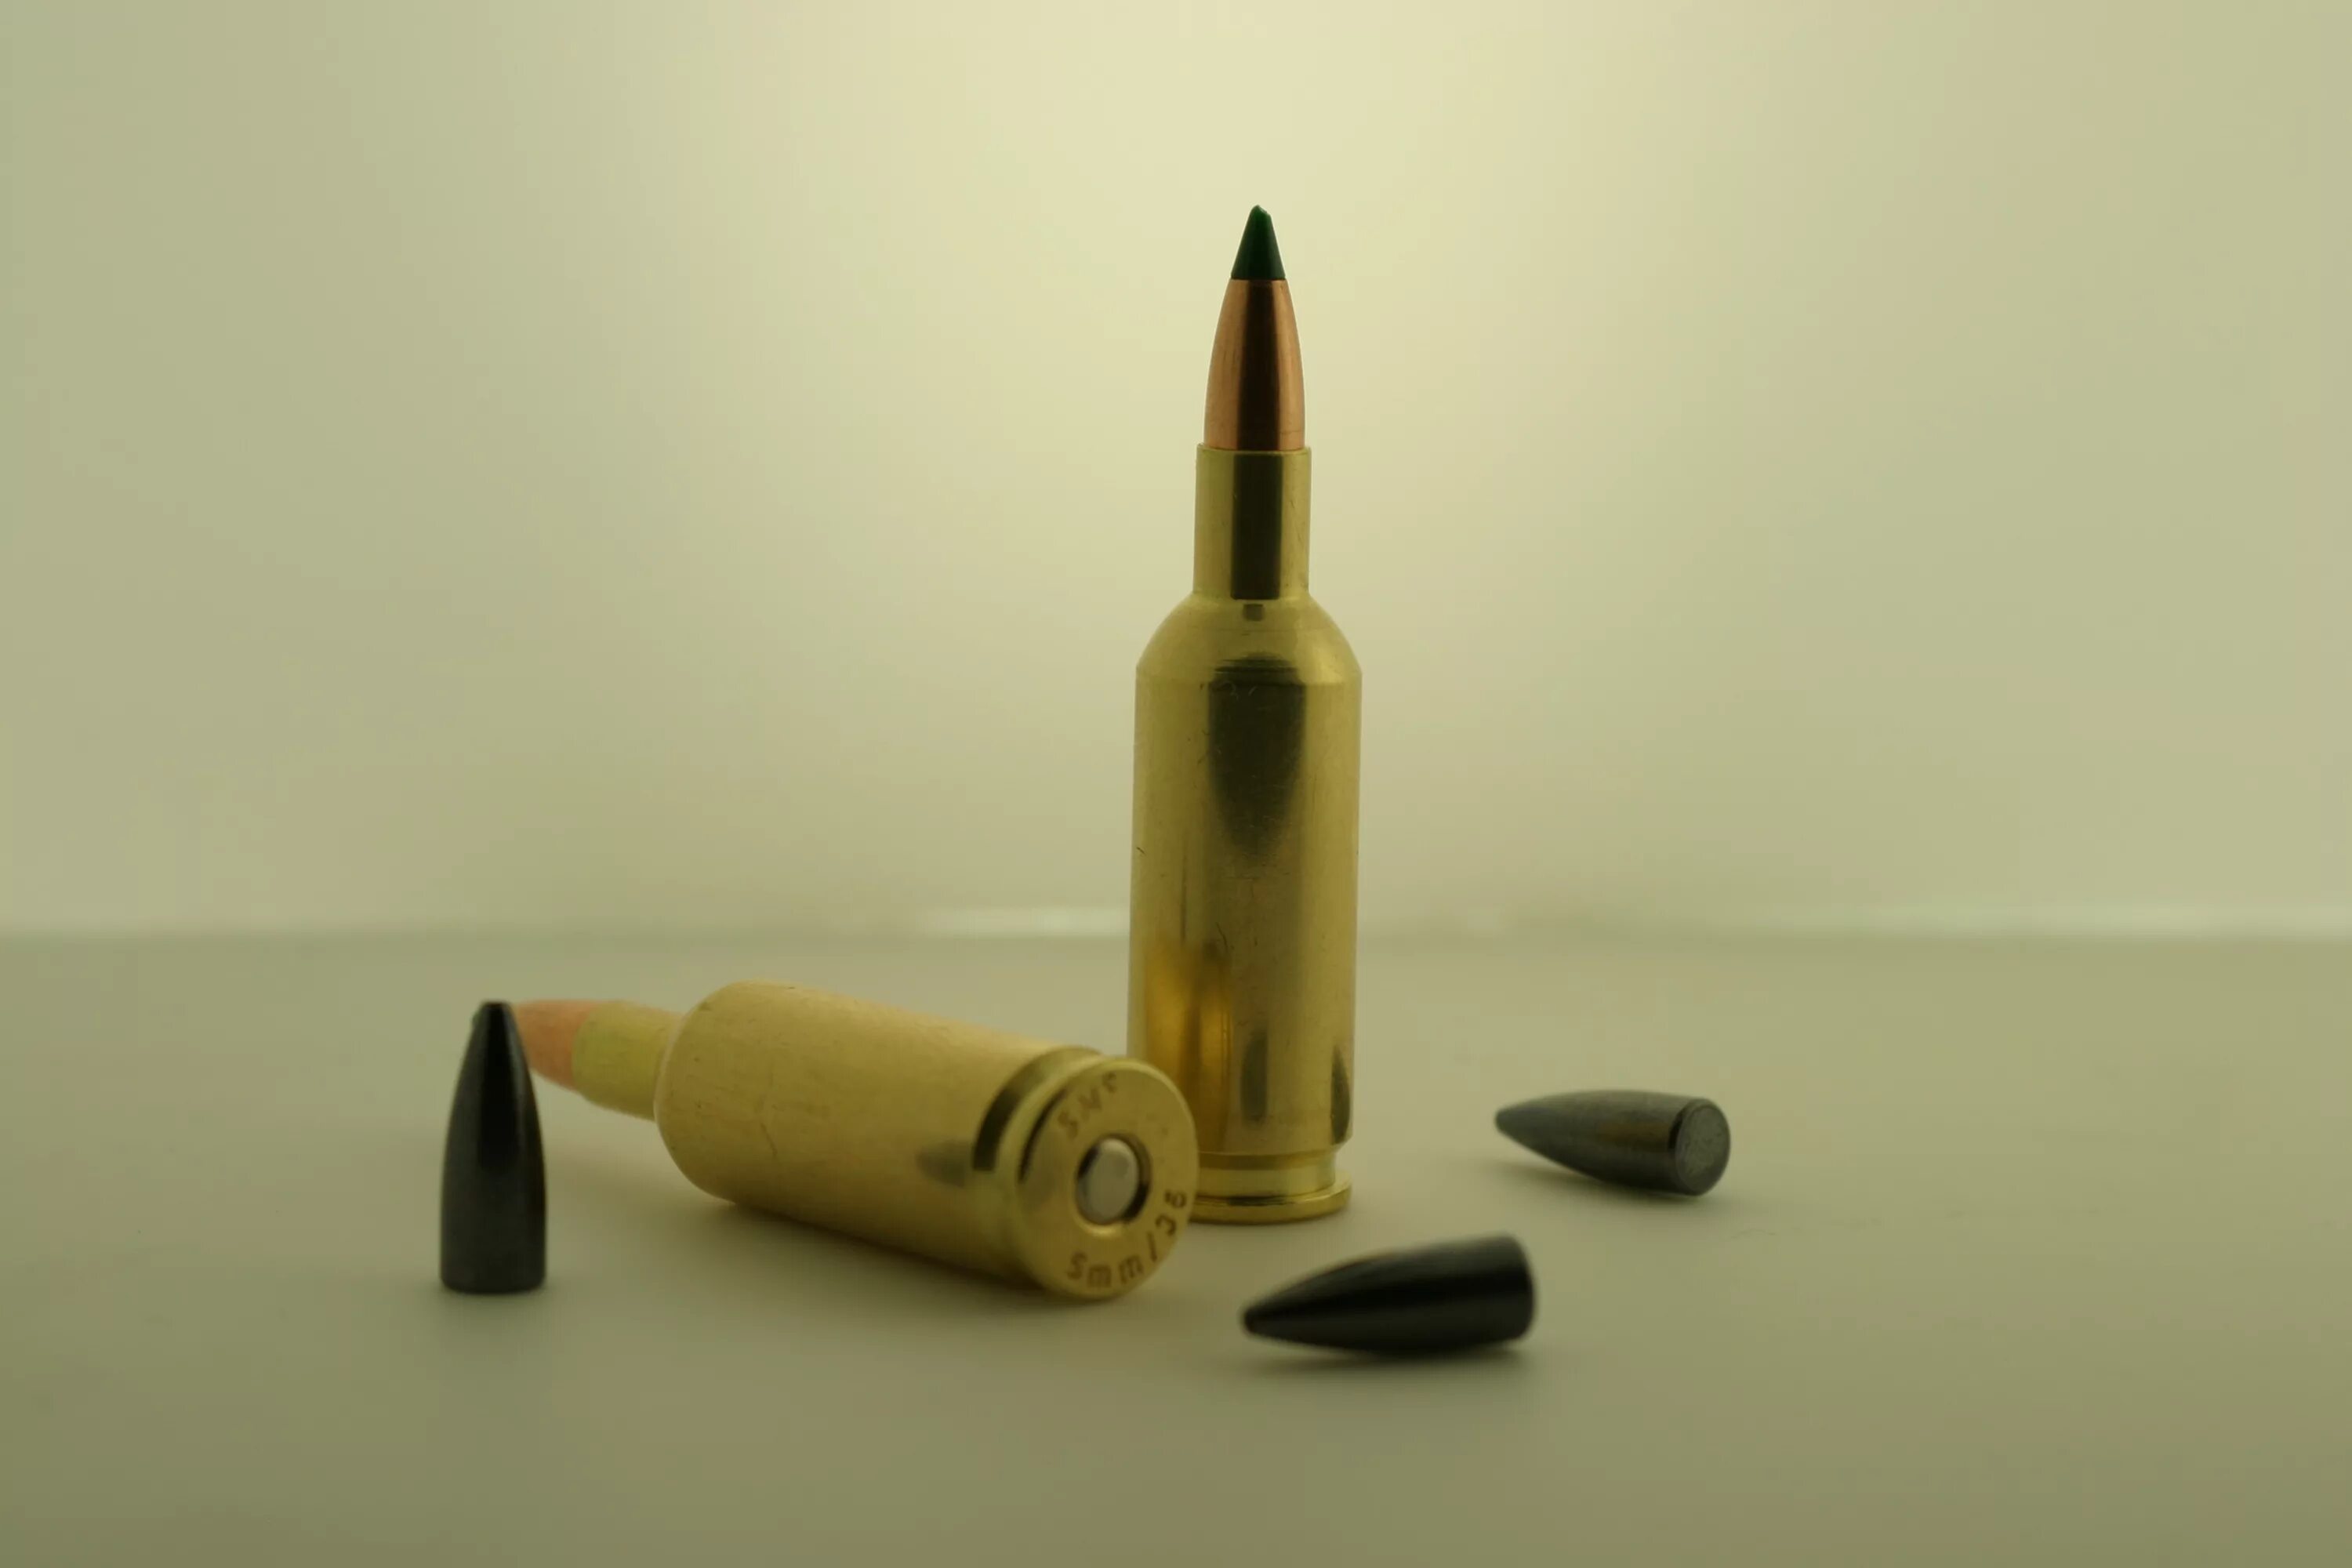 Олимпийский снаряд 5 букв. 5 Mm/35 SMC. 5mm Ammo. Патрон шаблон. Сладкие боеприпасы шаблон.